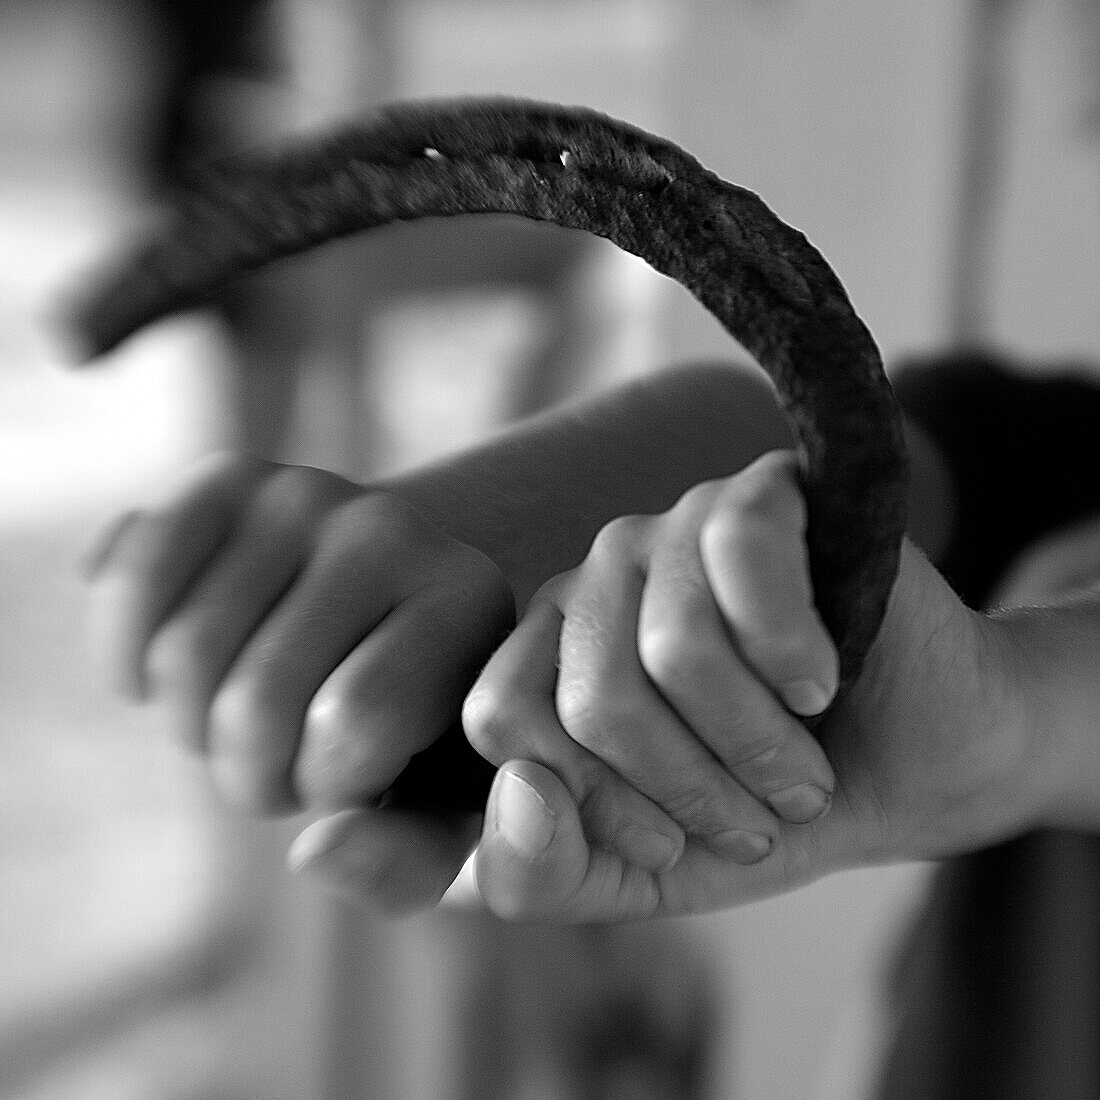 Hands holding a horseshoe (black and white photo using Lensbaby technique), Borden, Western Australia, Australia